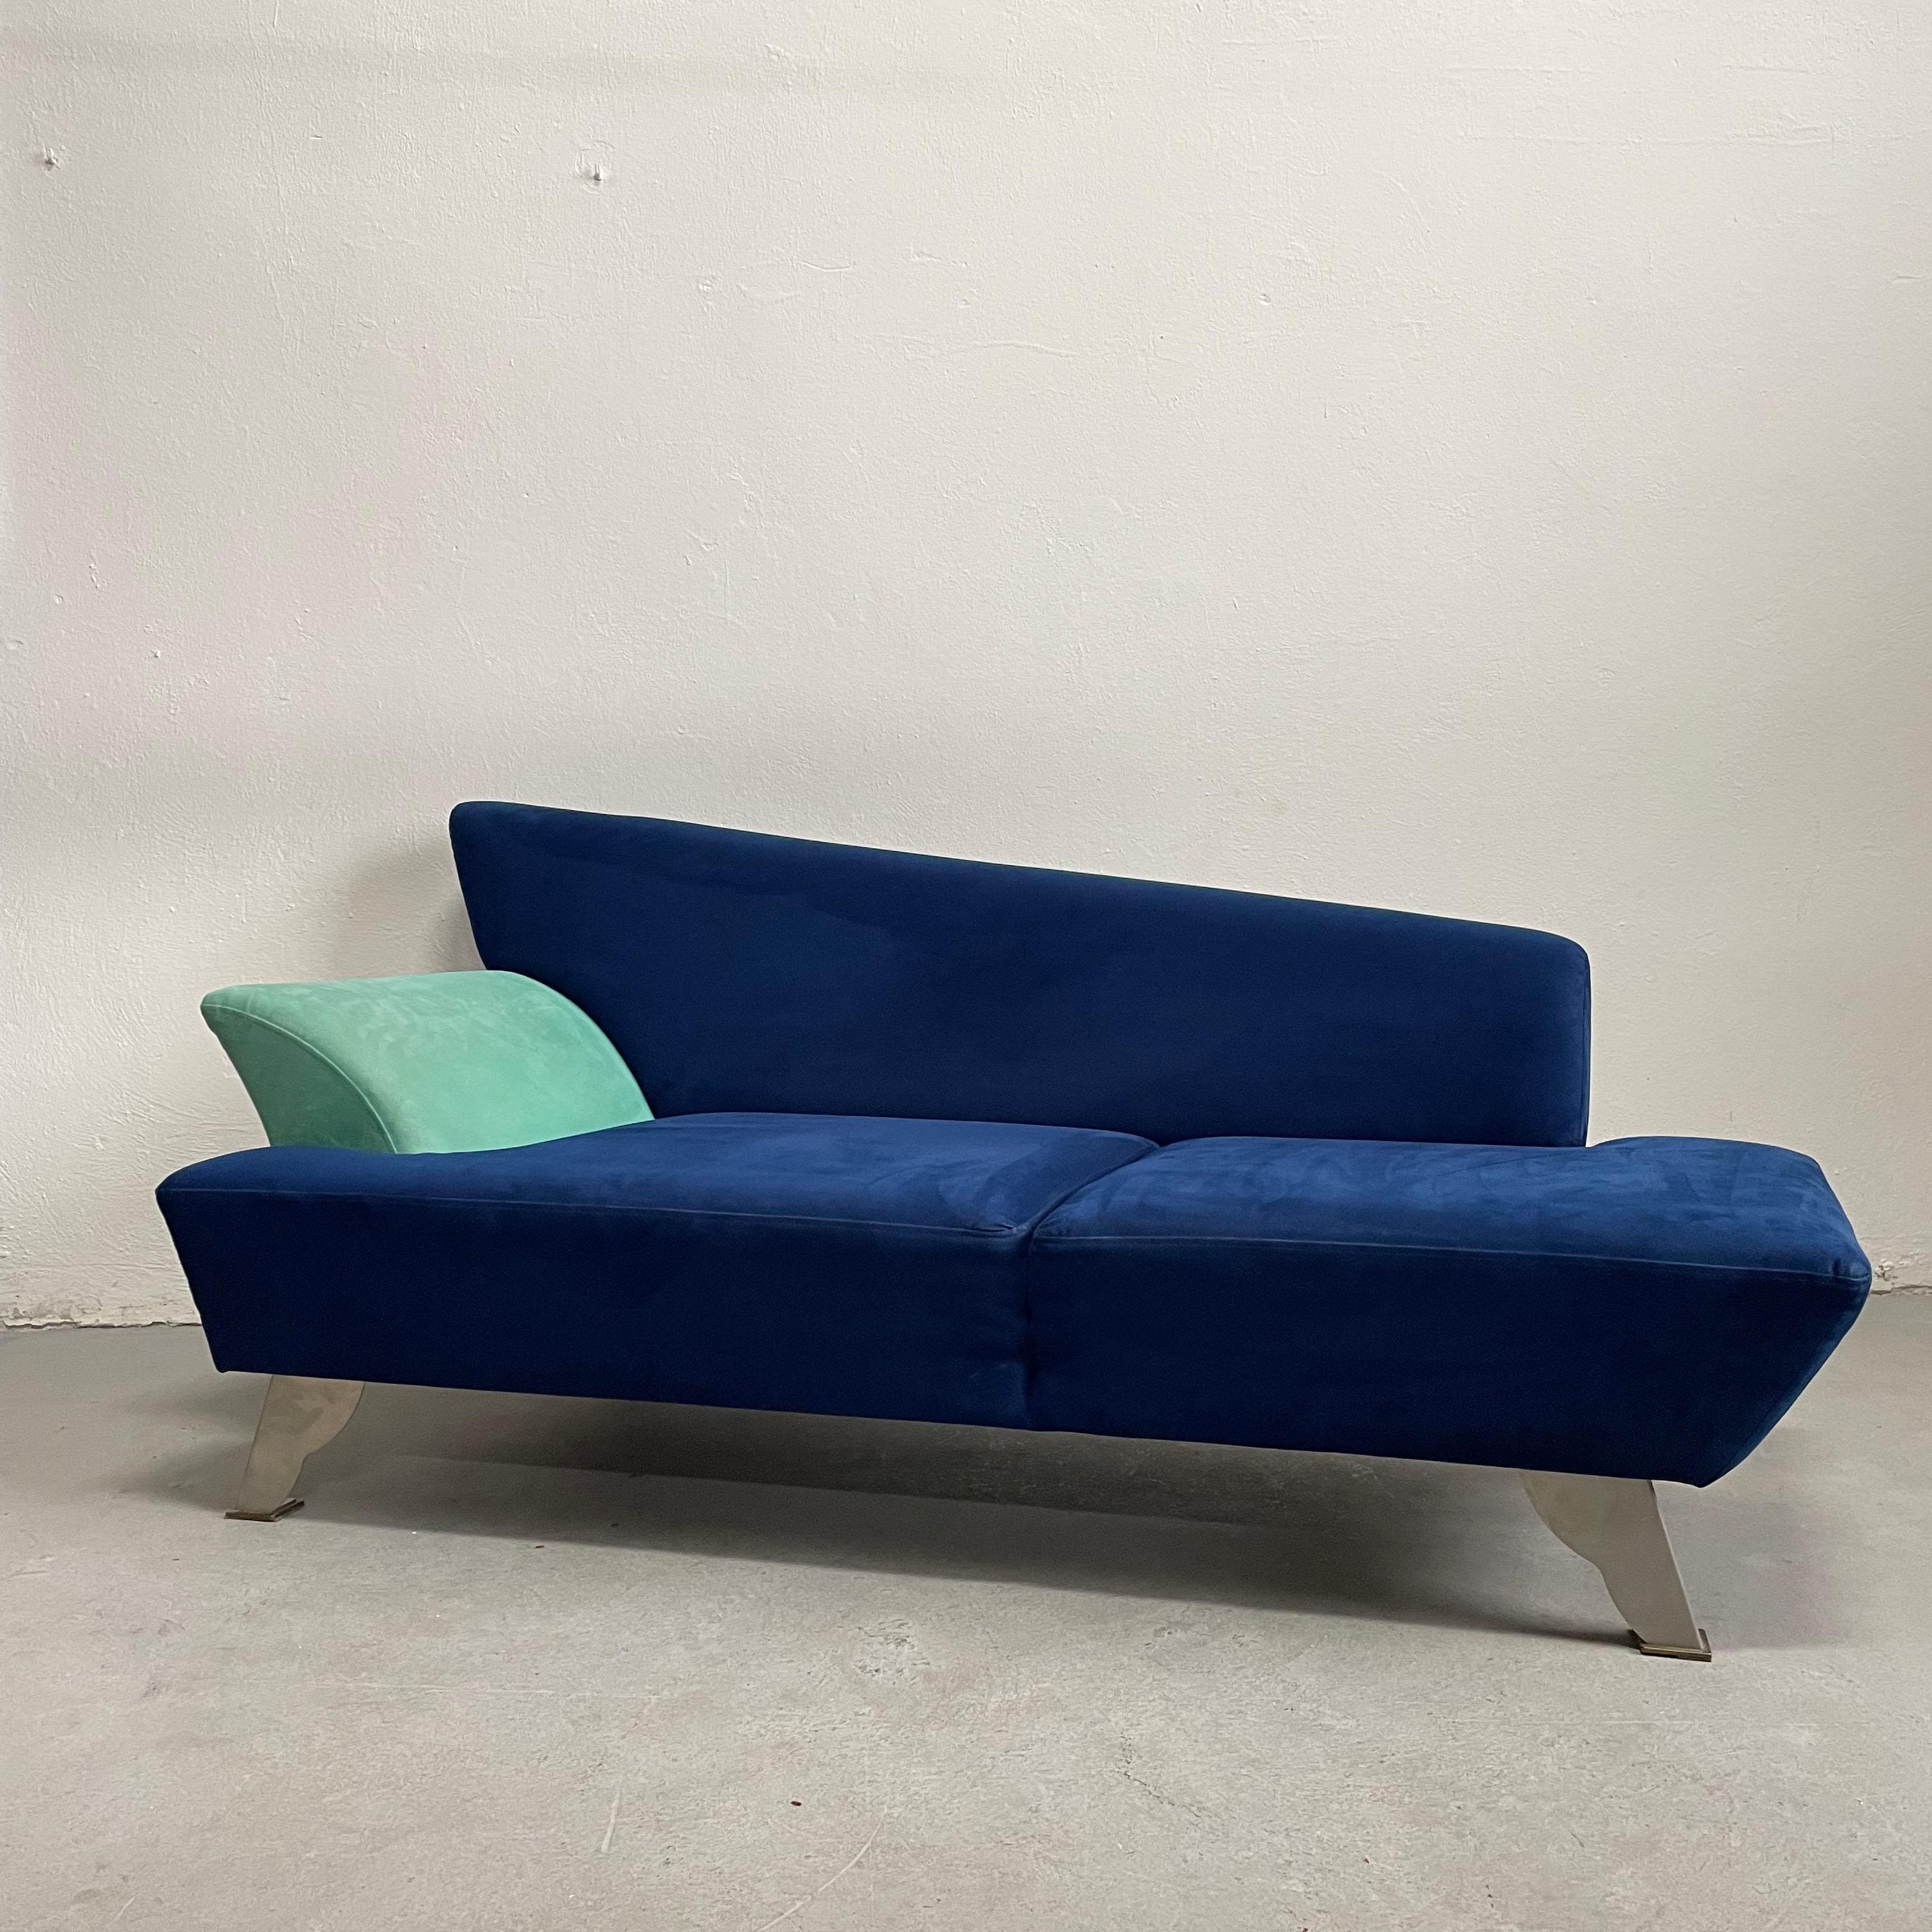 Memphis Style Italian 2-Seat Sofa in Blue Alcantara Fabric, Postmodern, 1980s For Sale 2